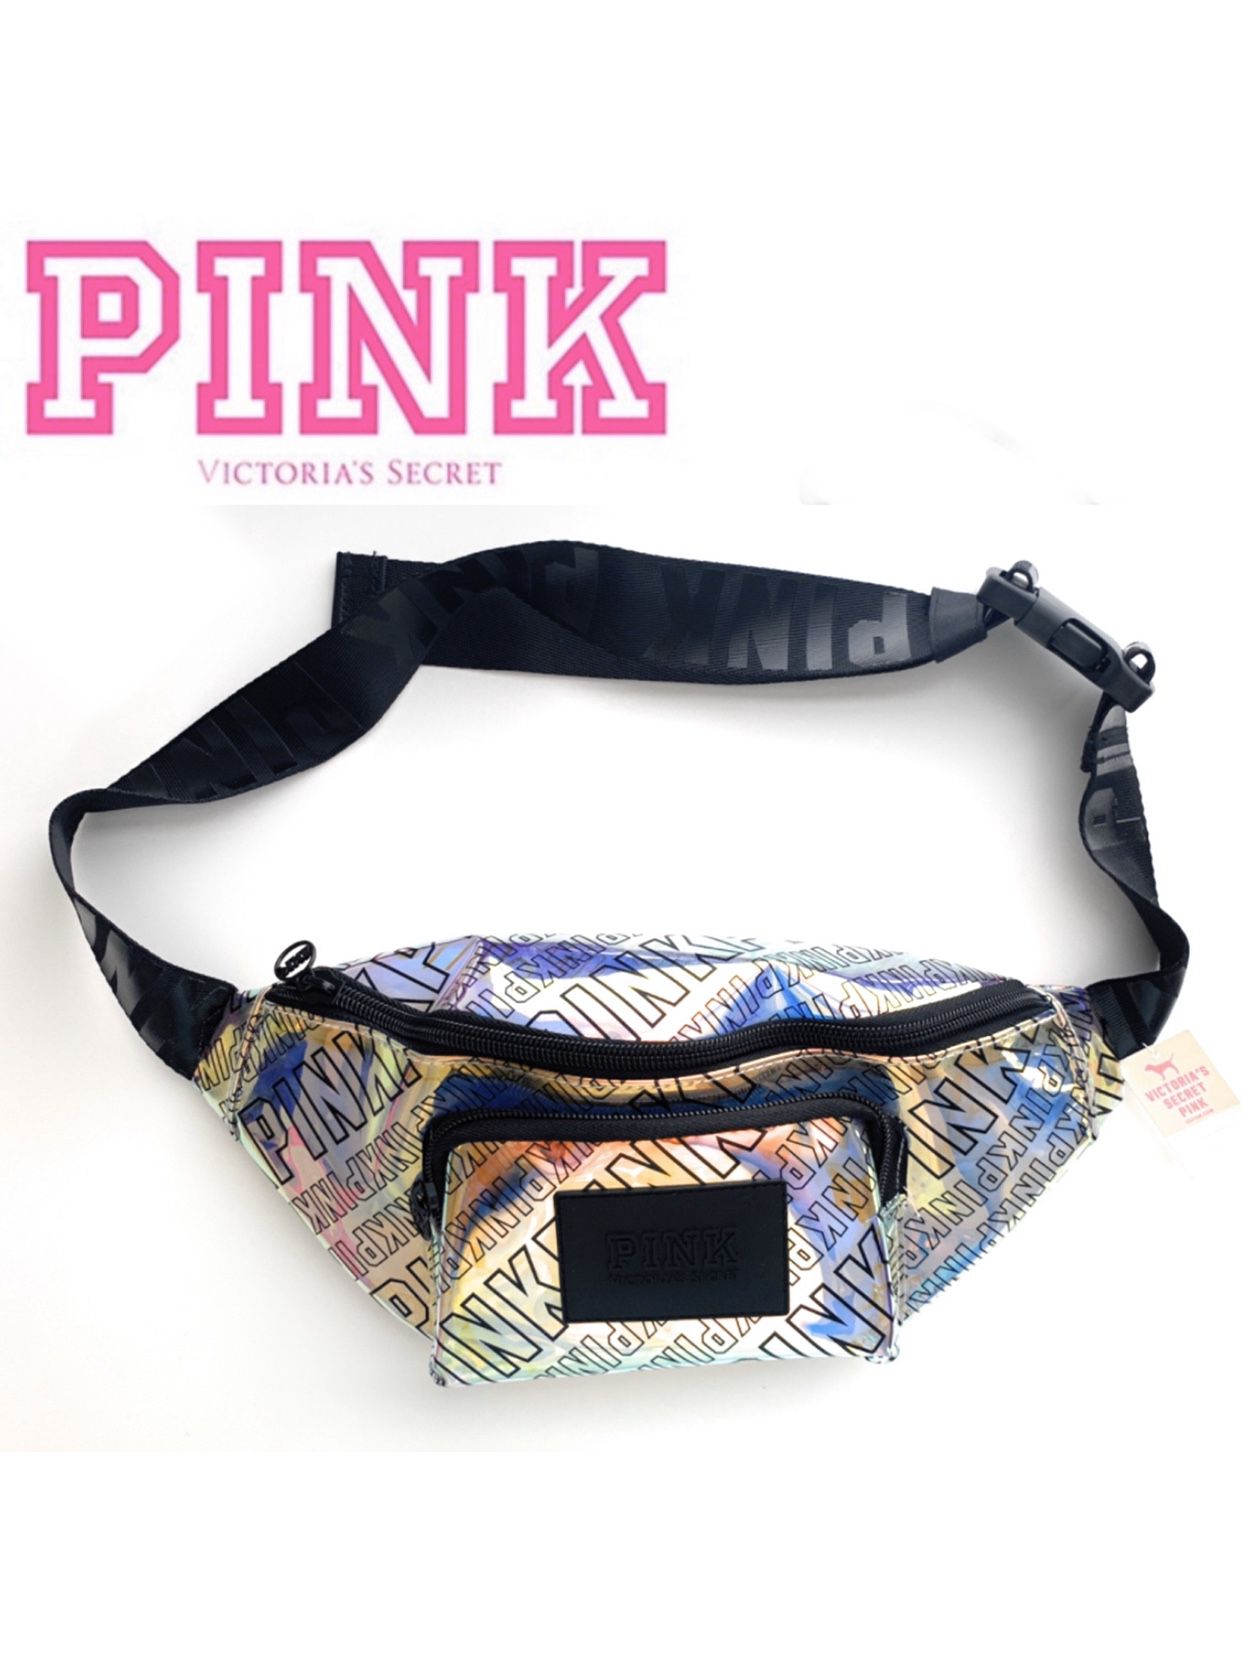 New Pink-Victoria-Secret Fanny Pack Belt Waist Bag Studded Logo PINK Iridescent